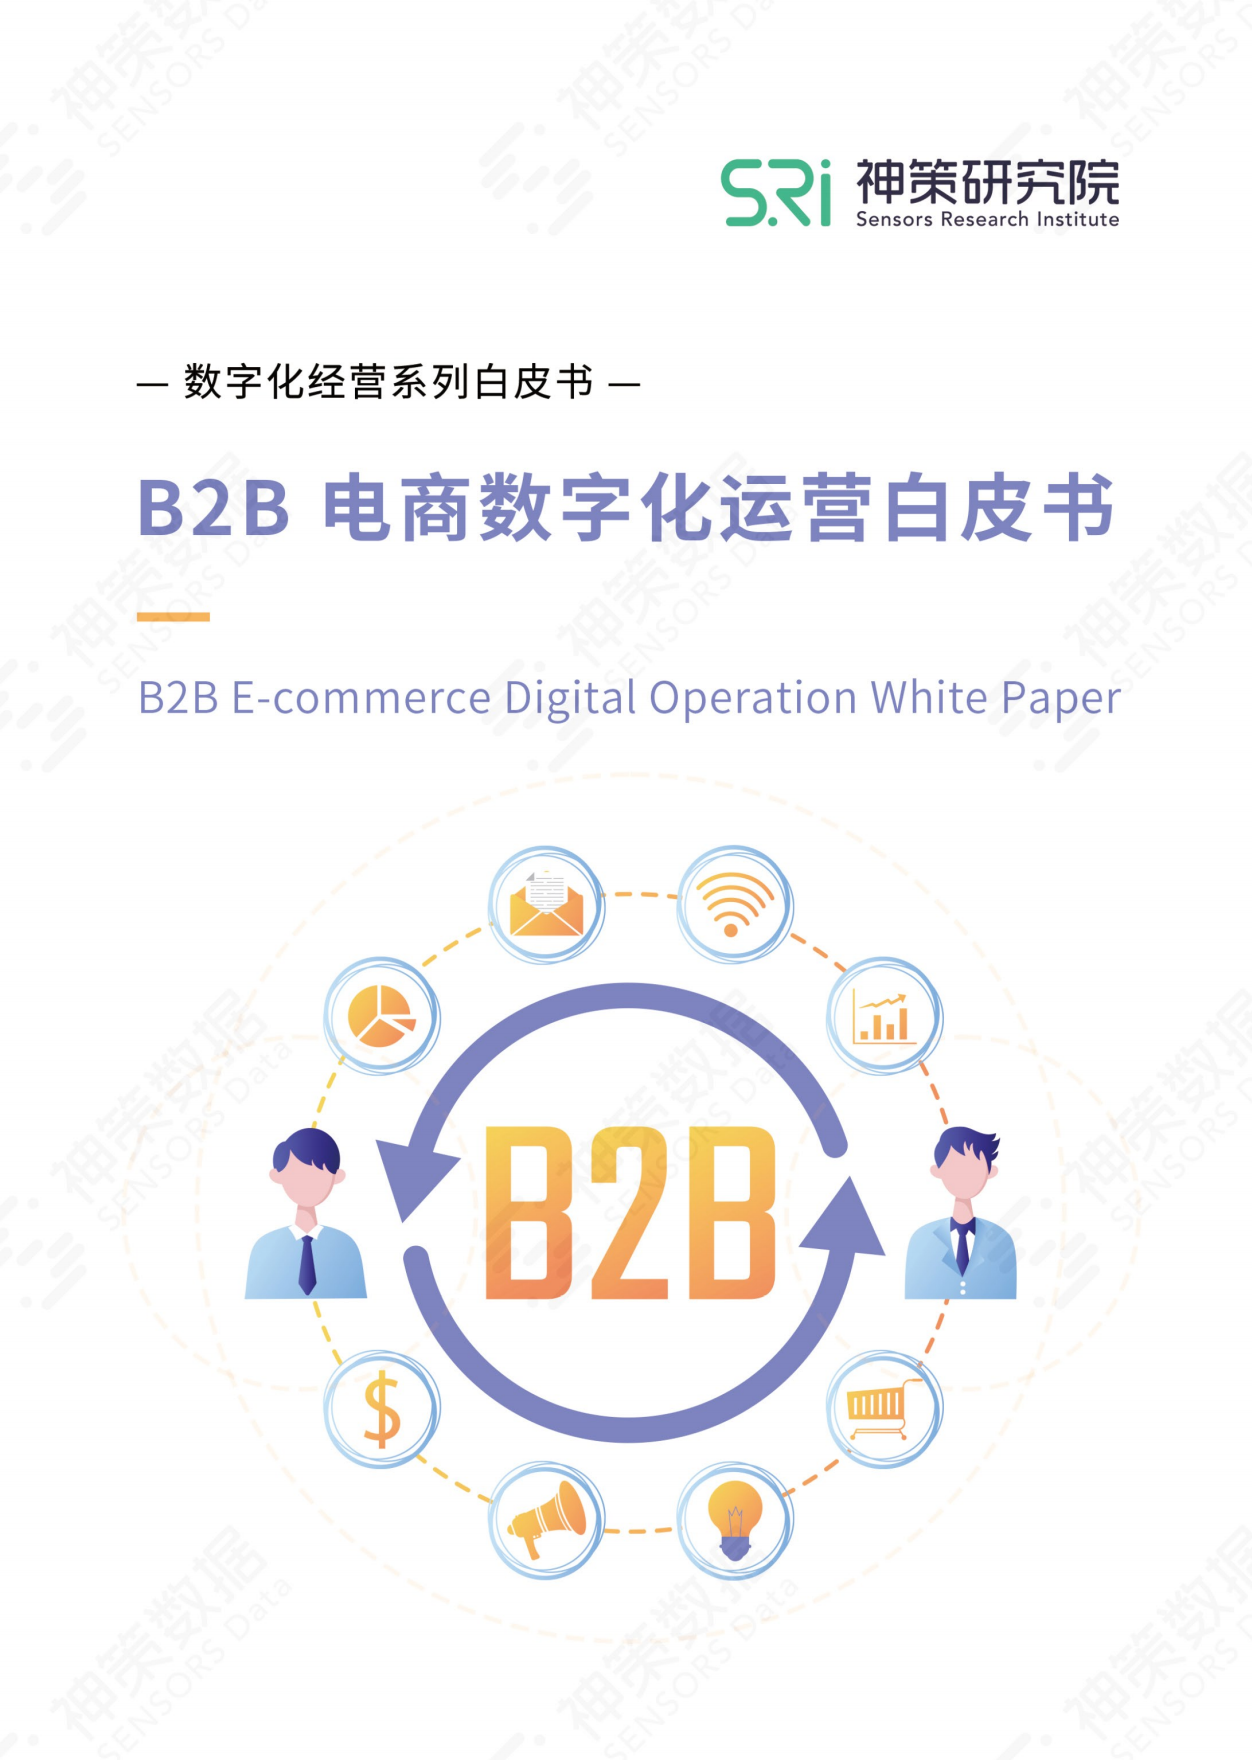 B2B 电商数字化运营白皮书_00.png